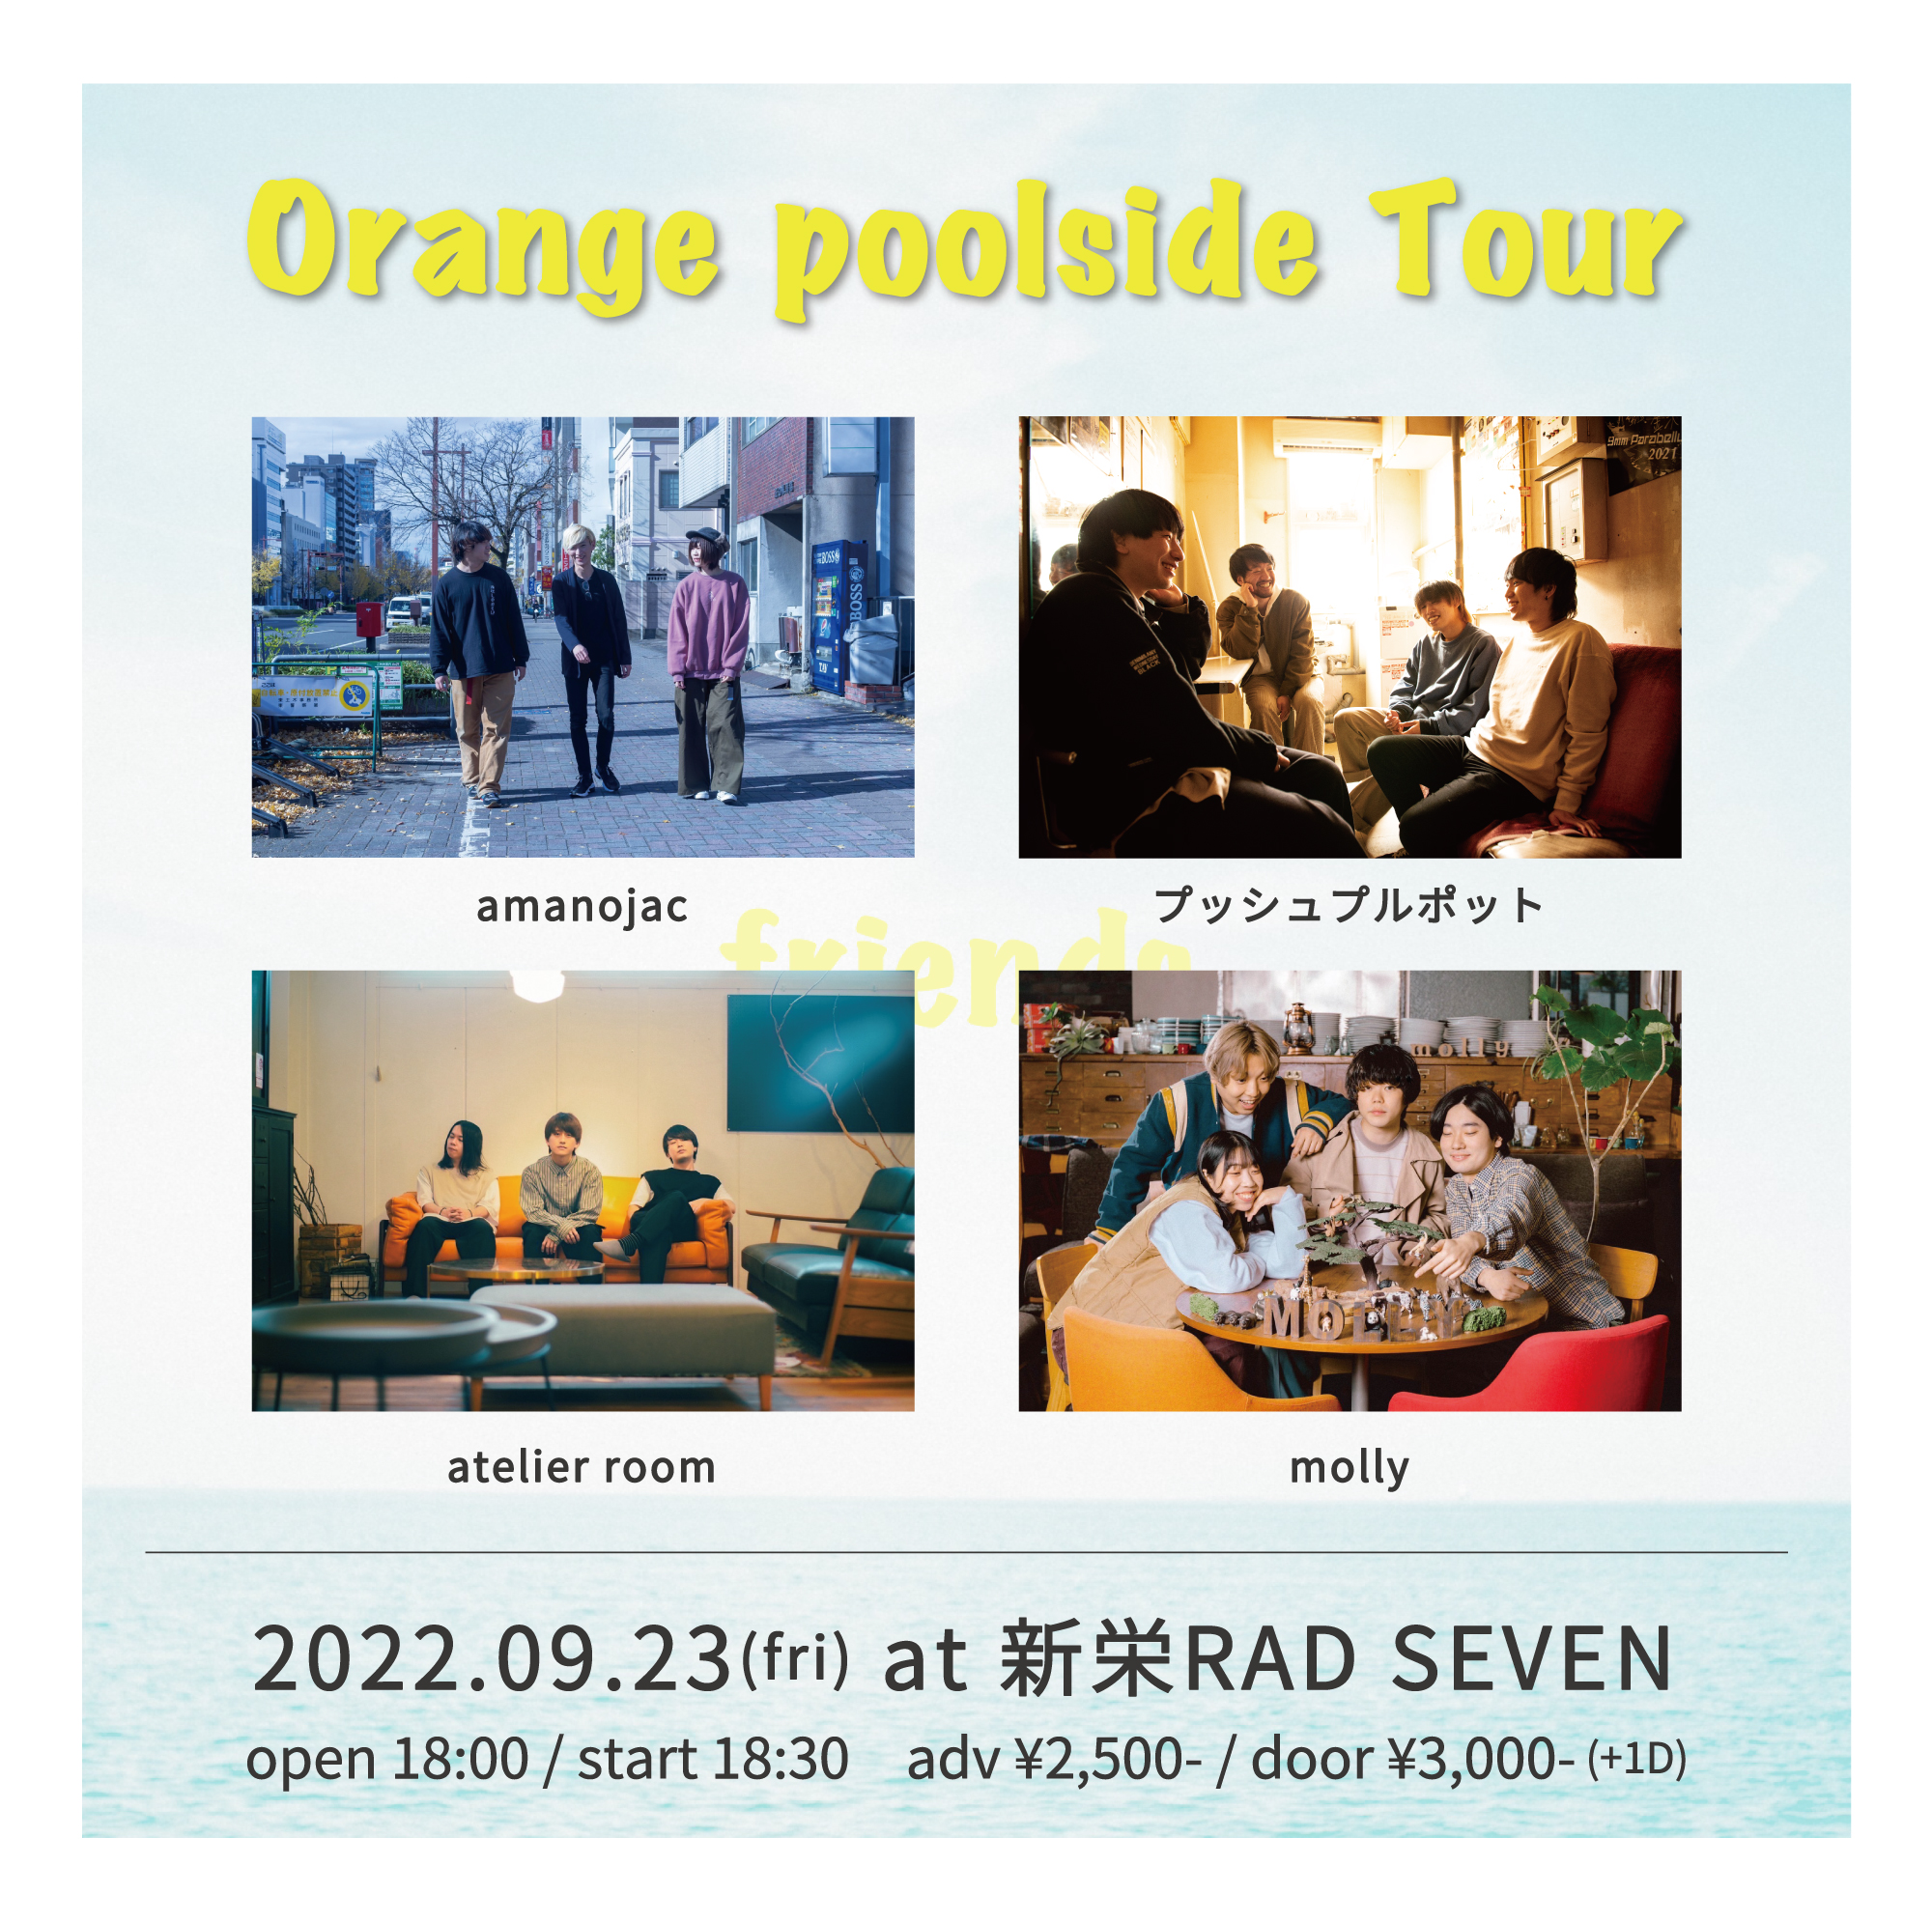 amanojac Orange poolside Tour